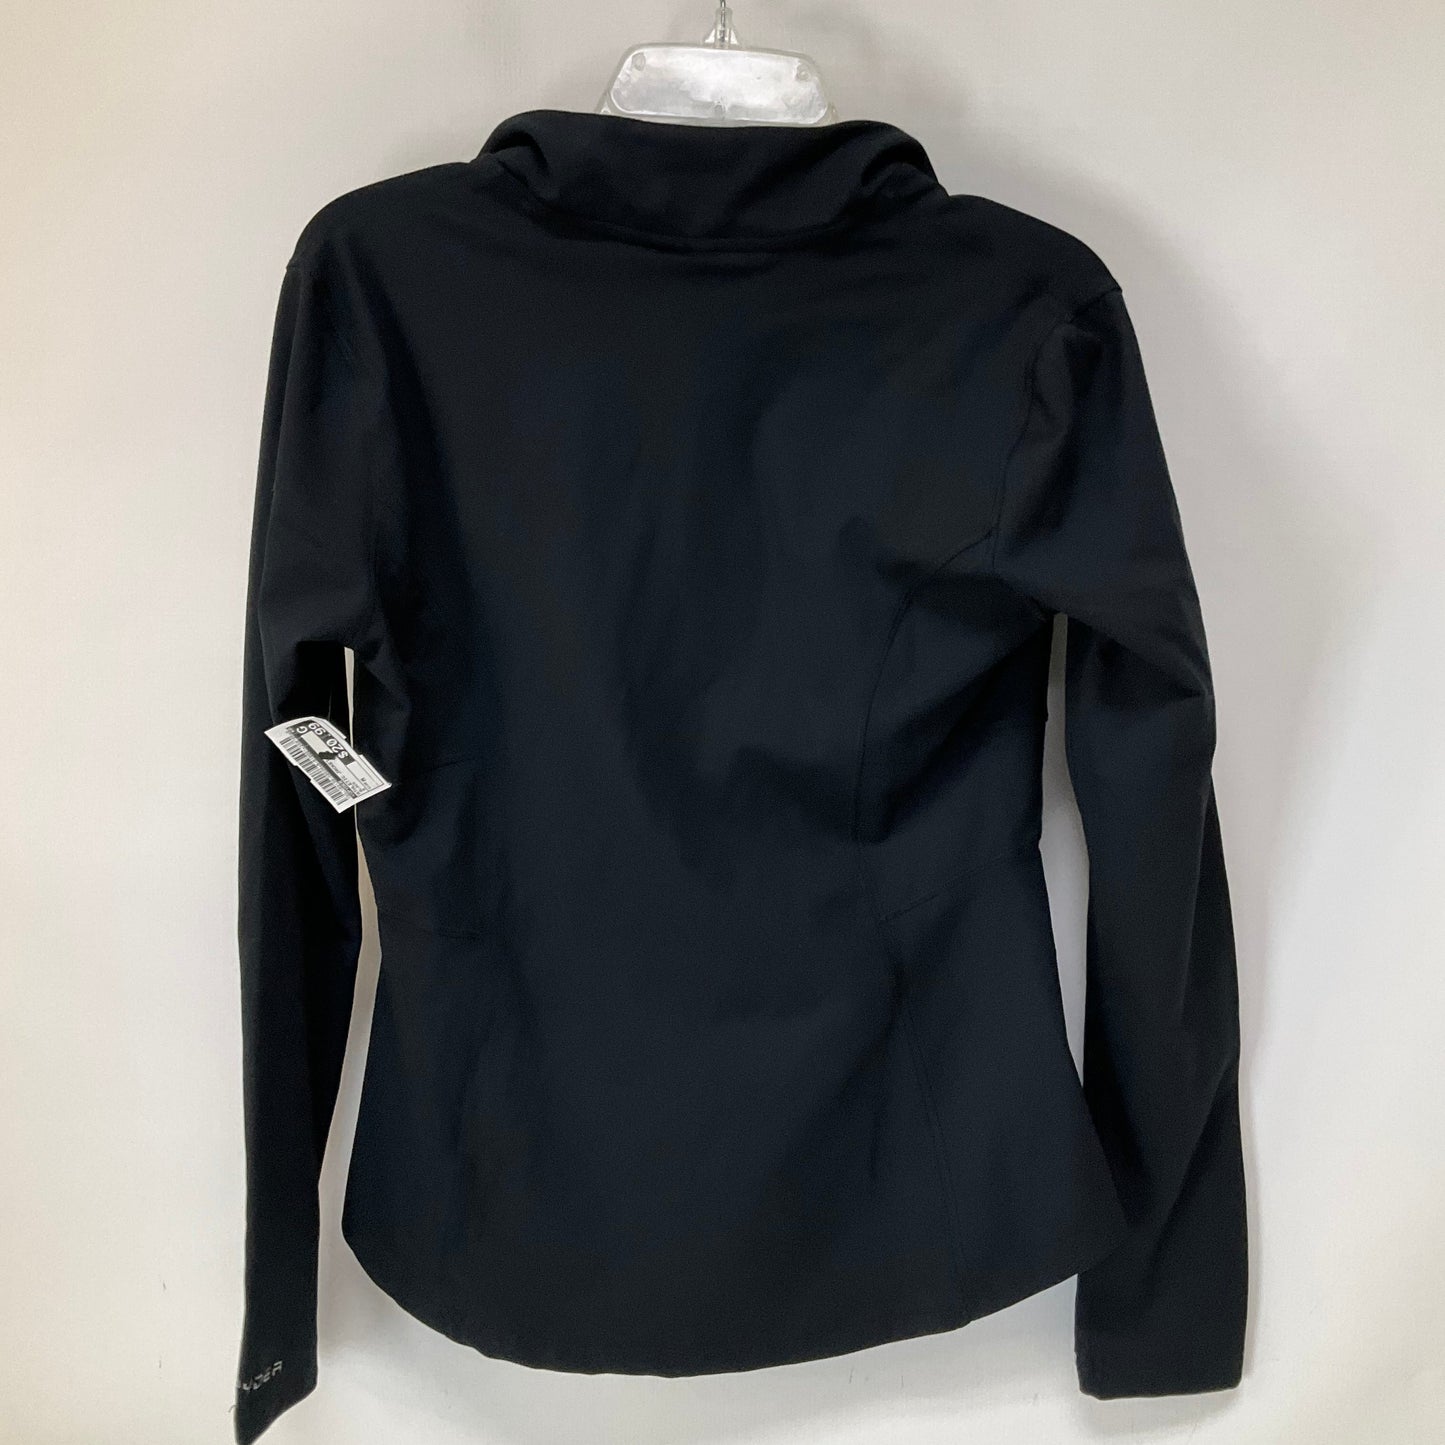 Black Athletic Jacket Spyder, Size M